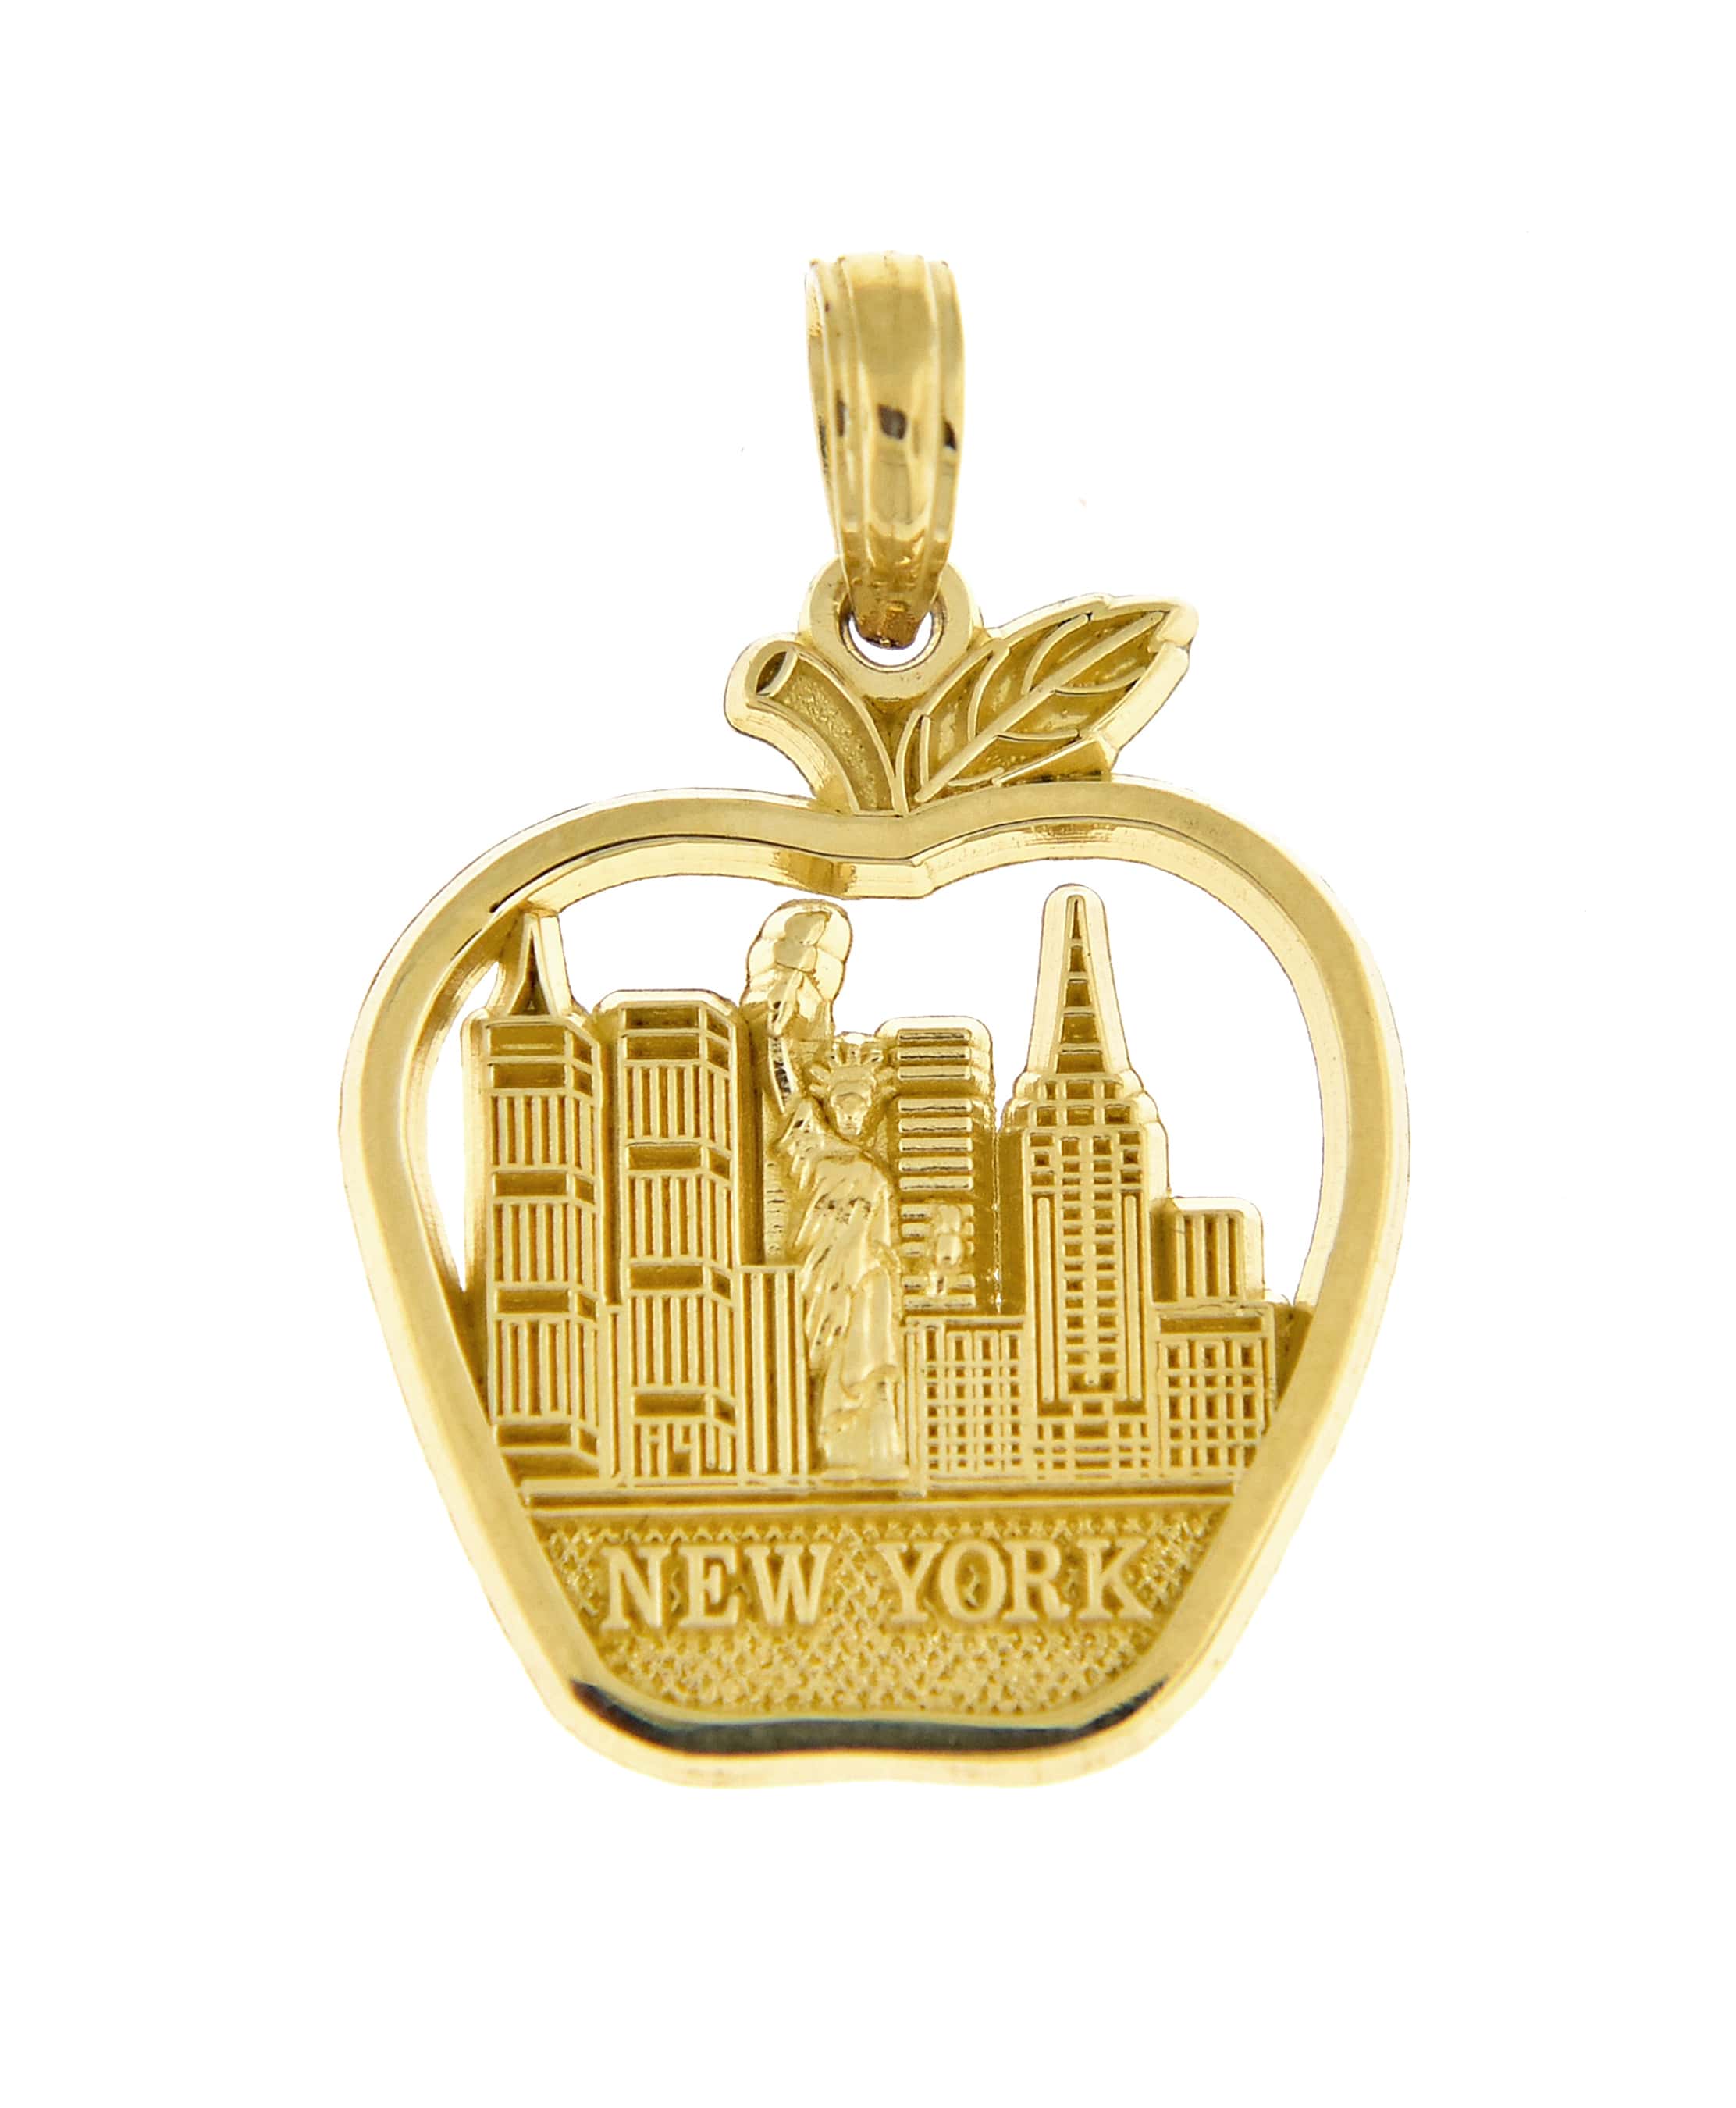 14K Yellow Gold New York City Skyline NY Statue of Liberty Big Apple Pendant Charm